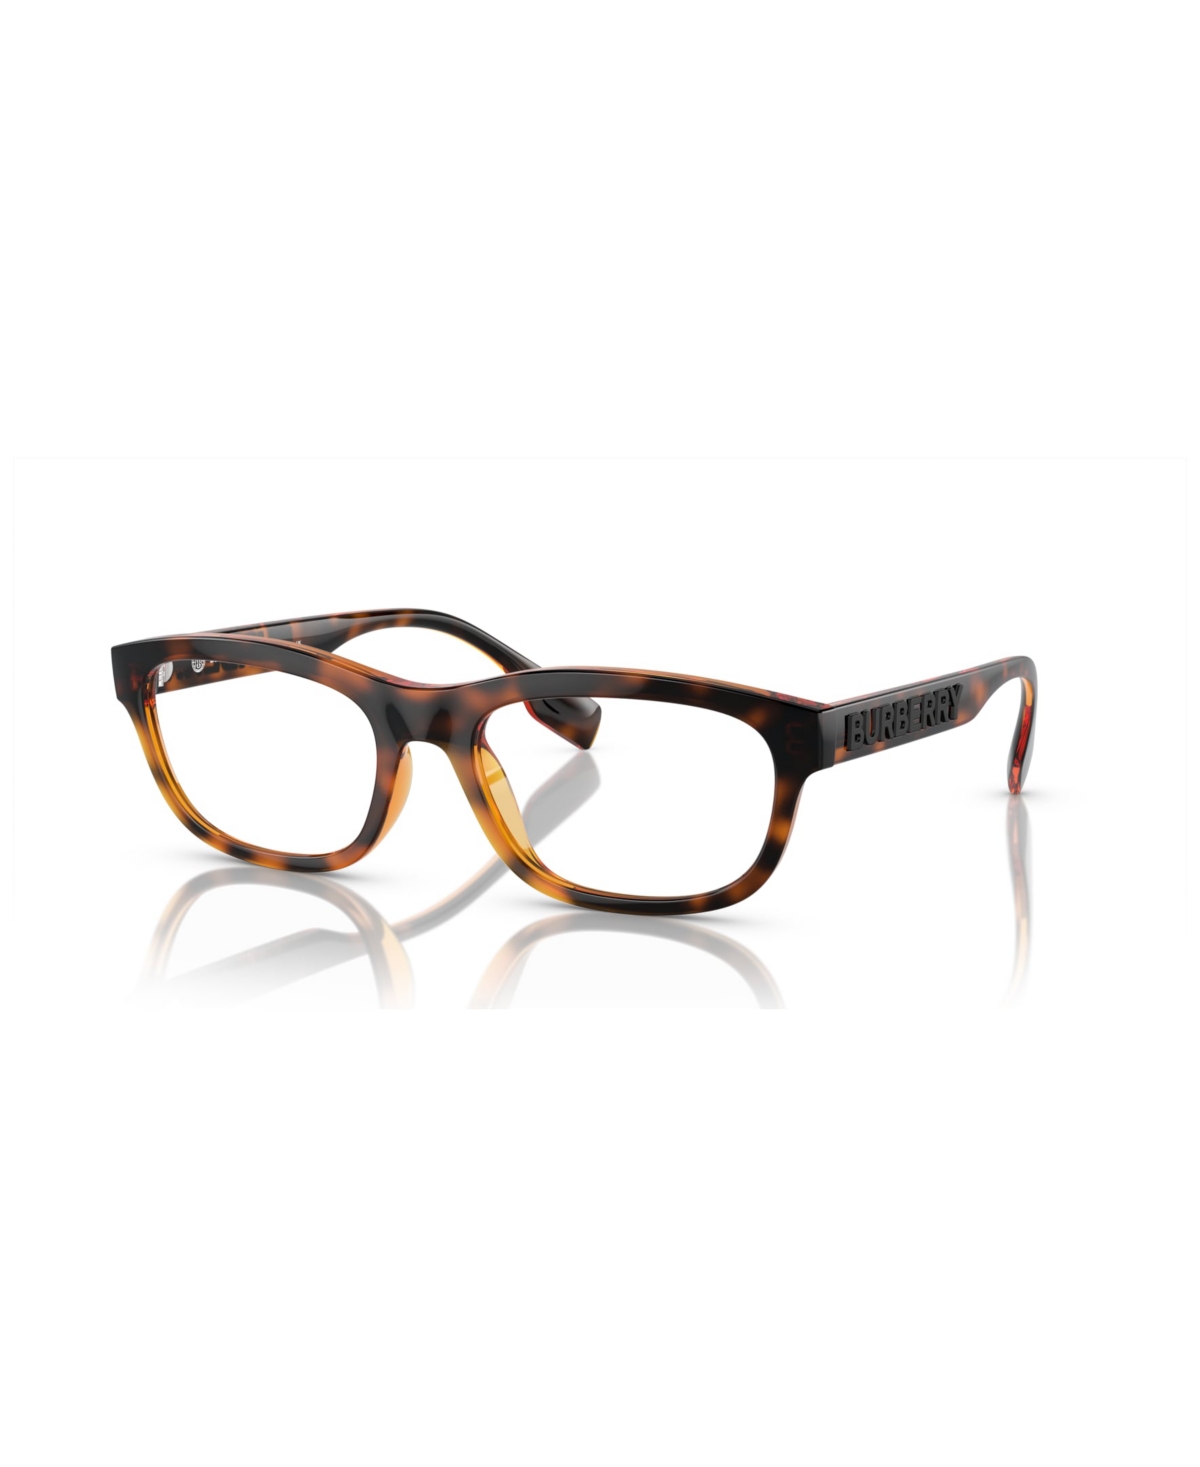 Men's Eyeglasses, BE2385U - Matte Black